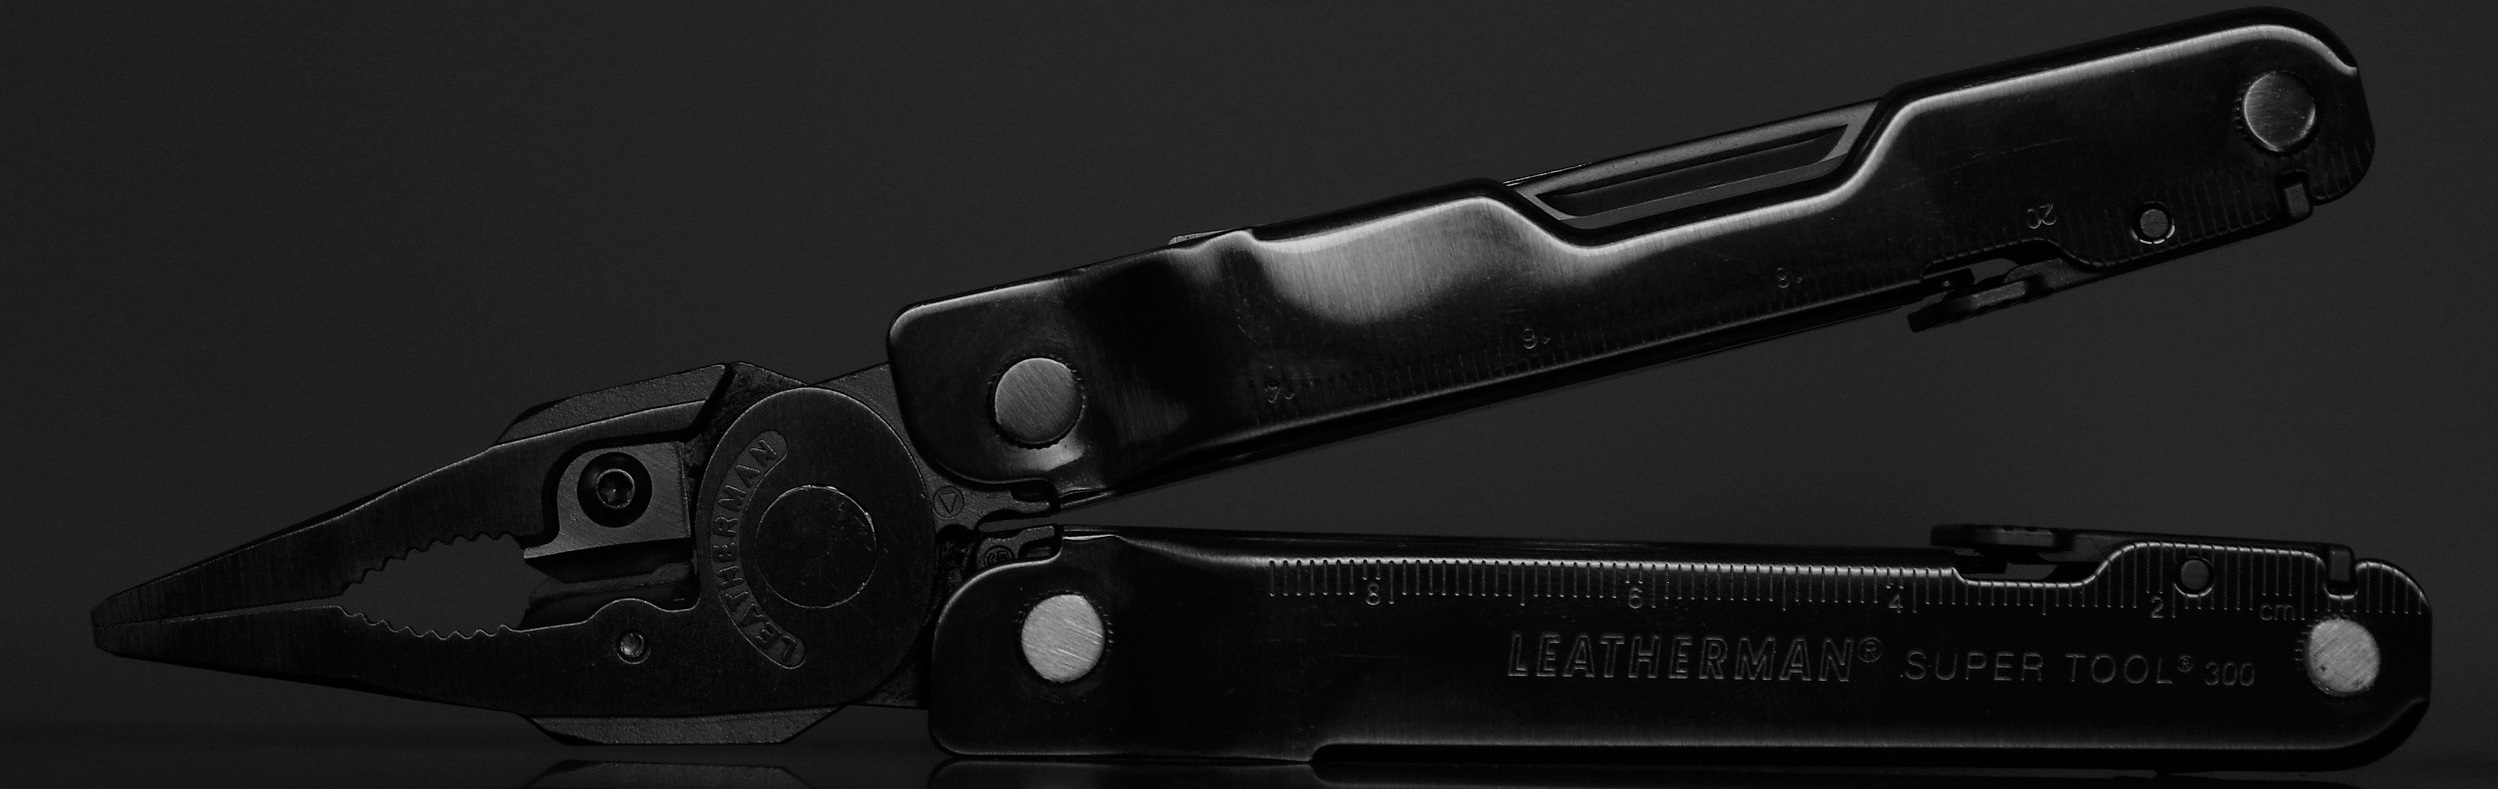 Полноразмерный мультитул Leatherman Super Tool 300 Black